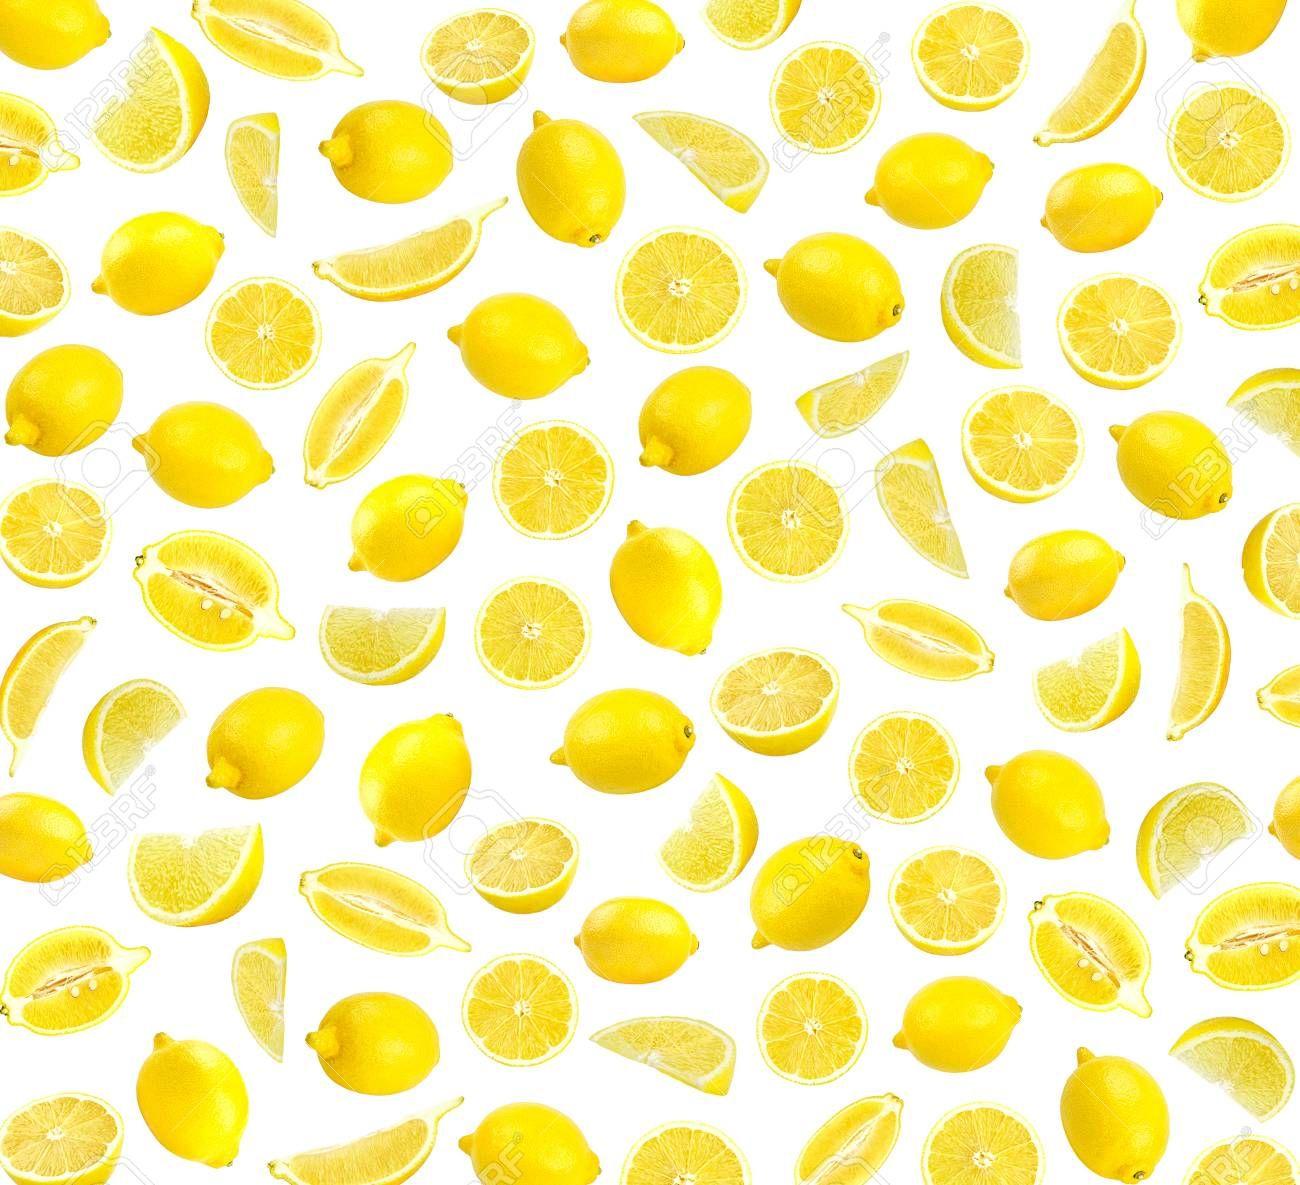 Lemon Pattern Wallpapers - Top Free Lemon Pattern Backgrounds ...